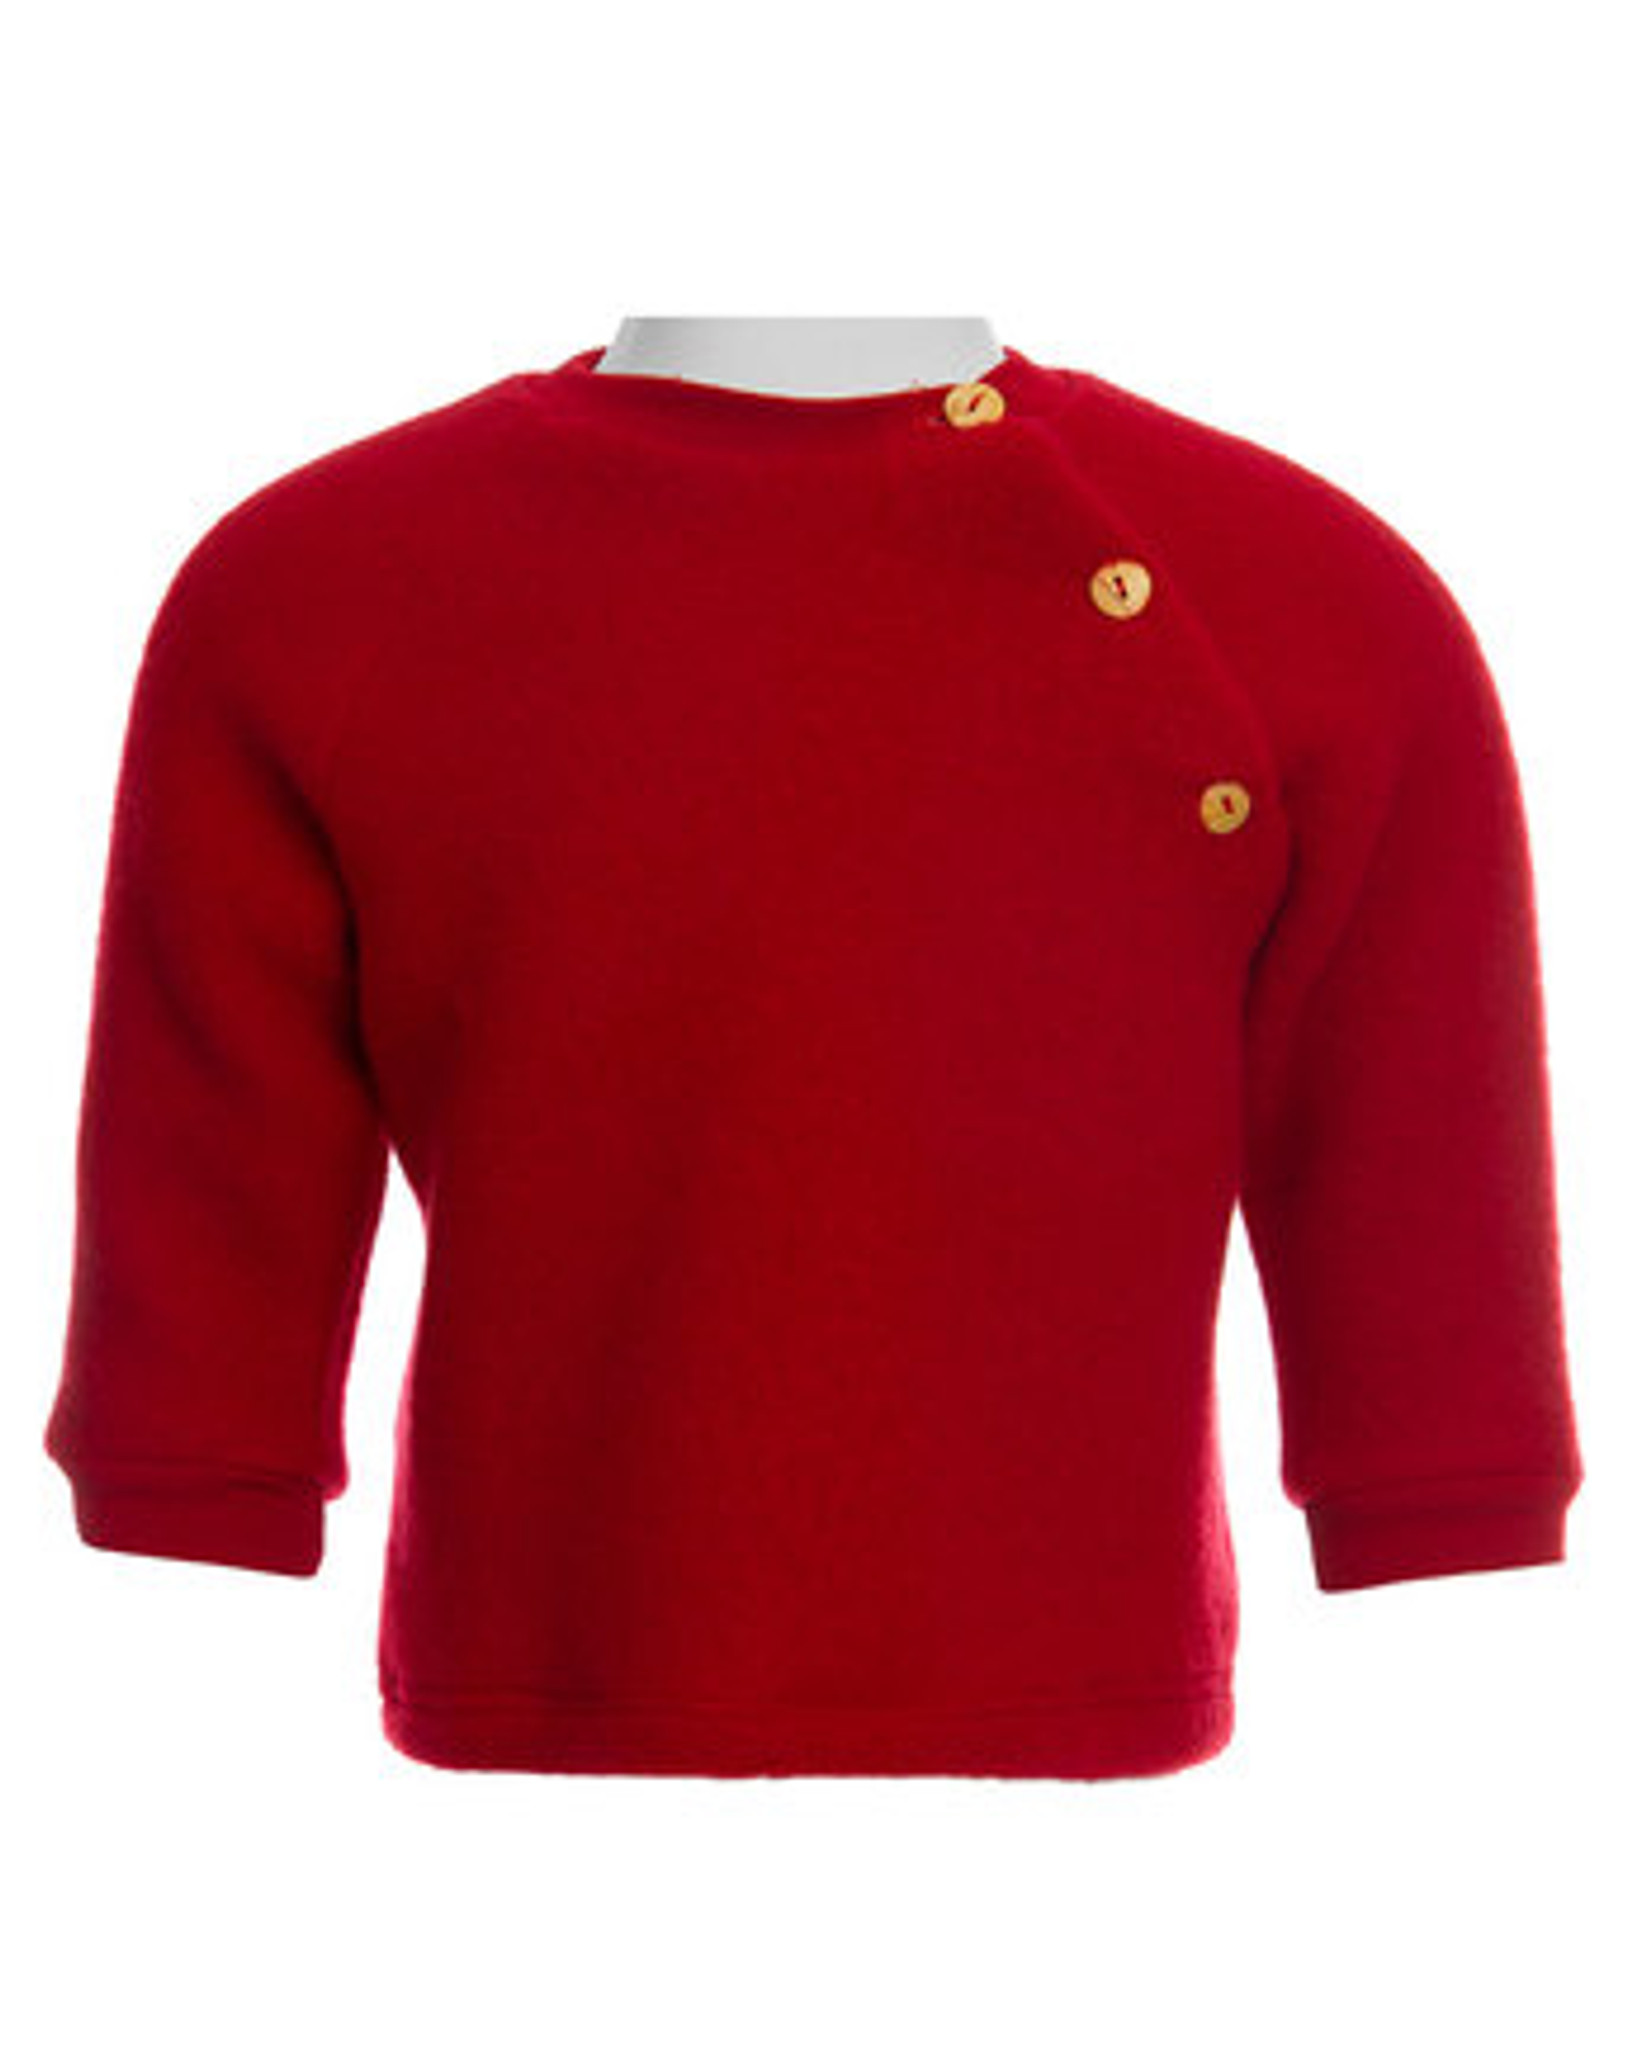 Engel Wool Fleece Raglan Sweater Red - Merino Wool Clothes for Babies -  Ava's Appletree